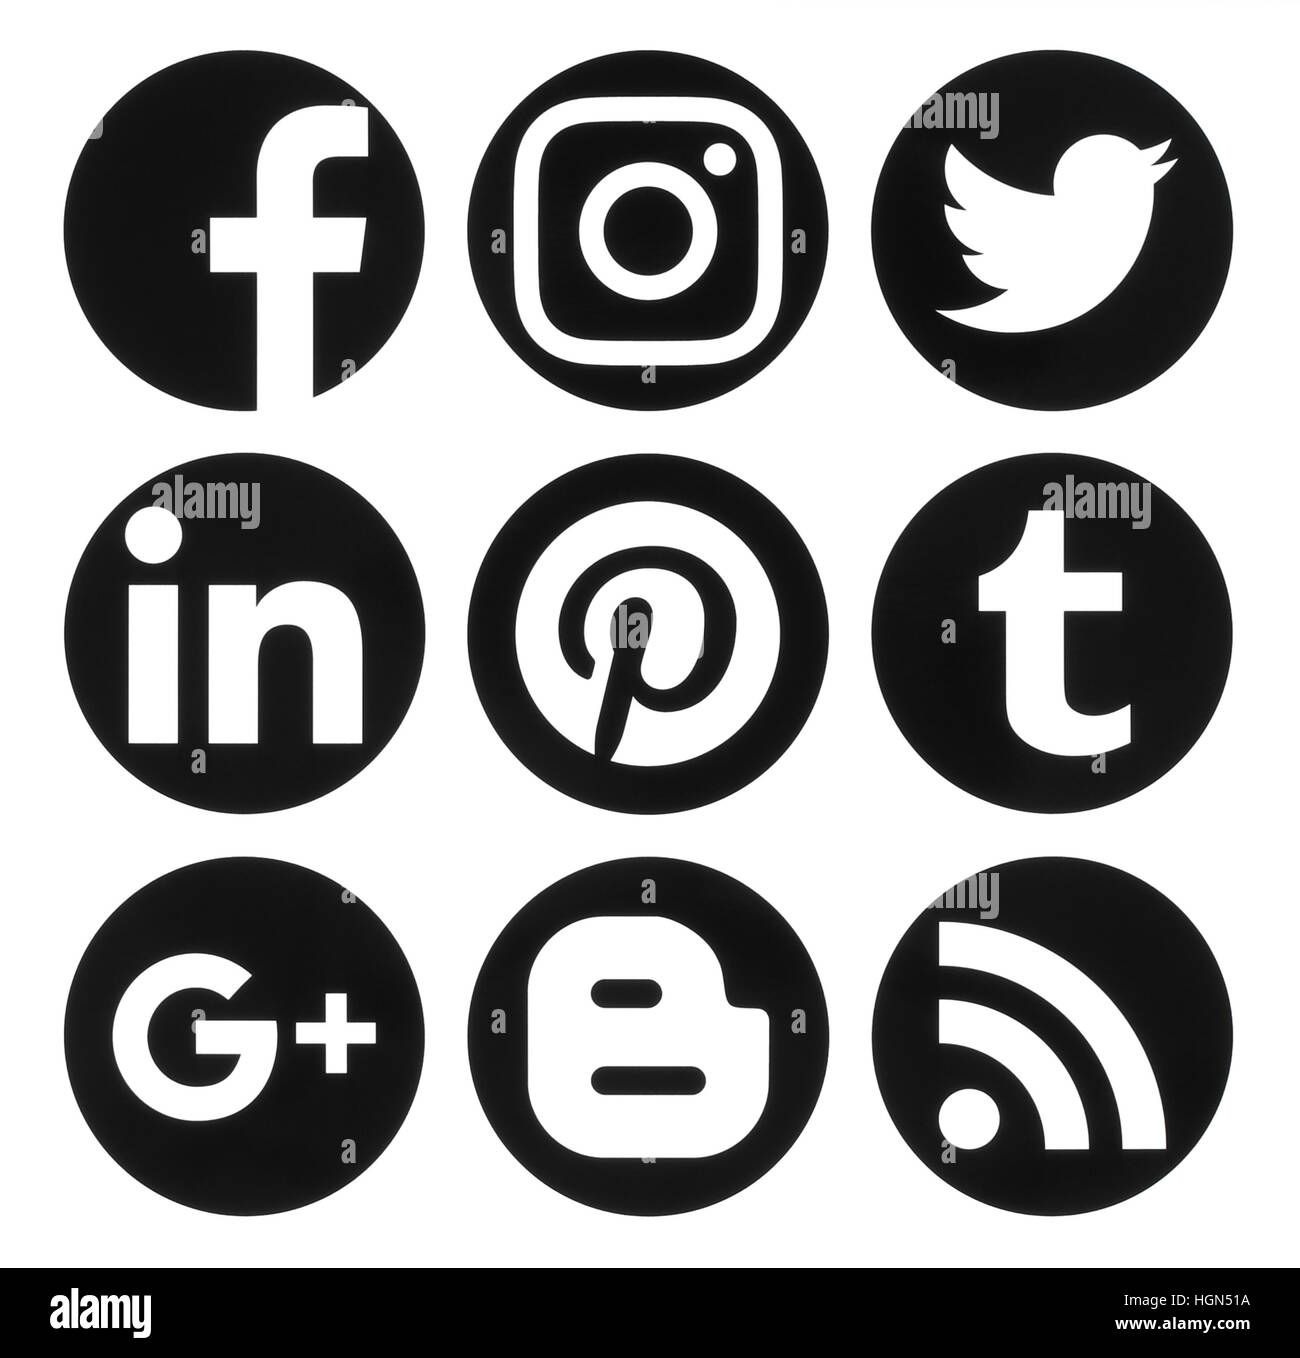 Social media logos Black and White Stock Photos & Images - Alamy